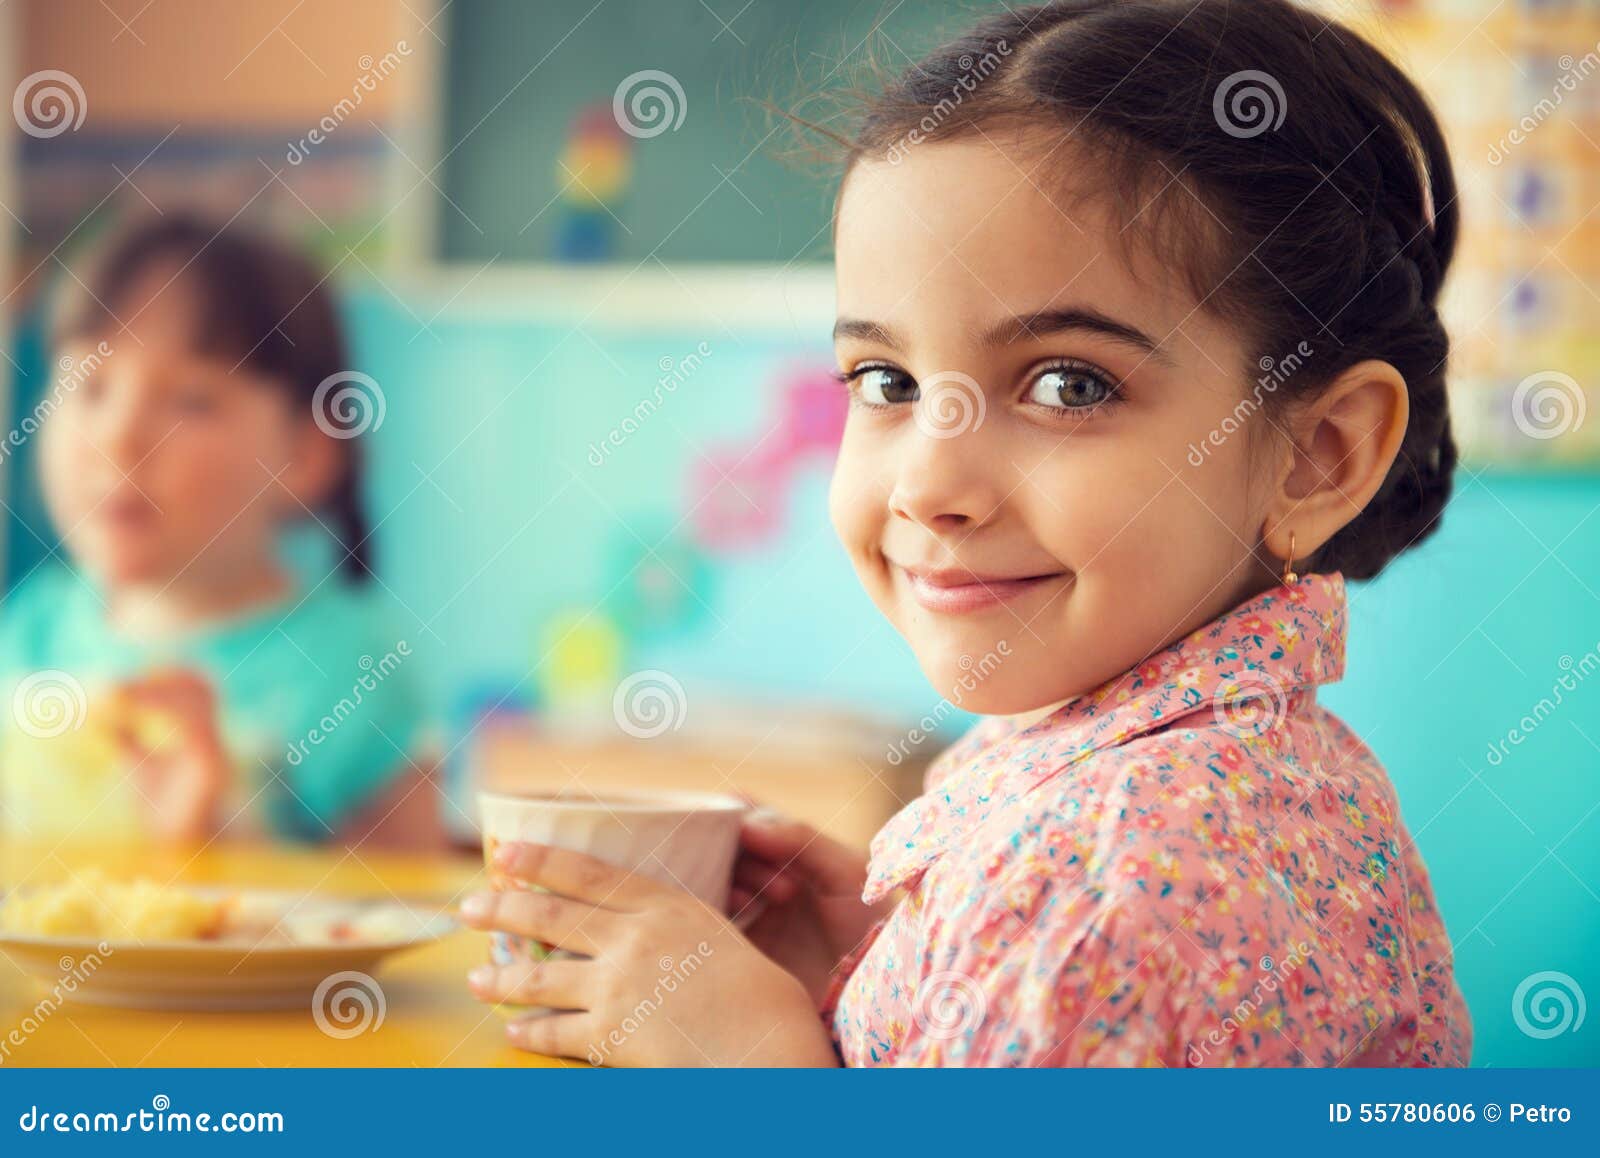 cute hispanic girl drinking milk at school